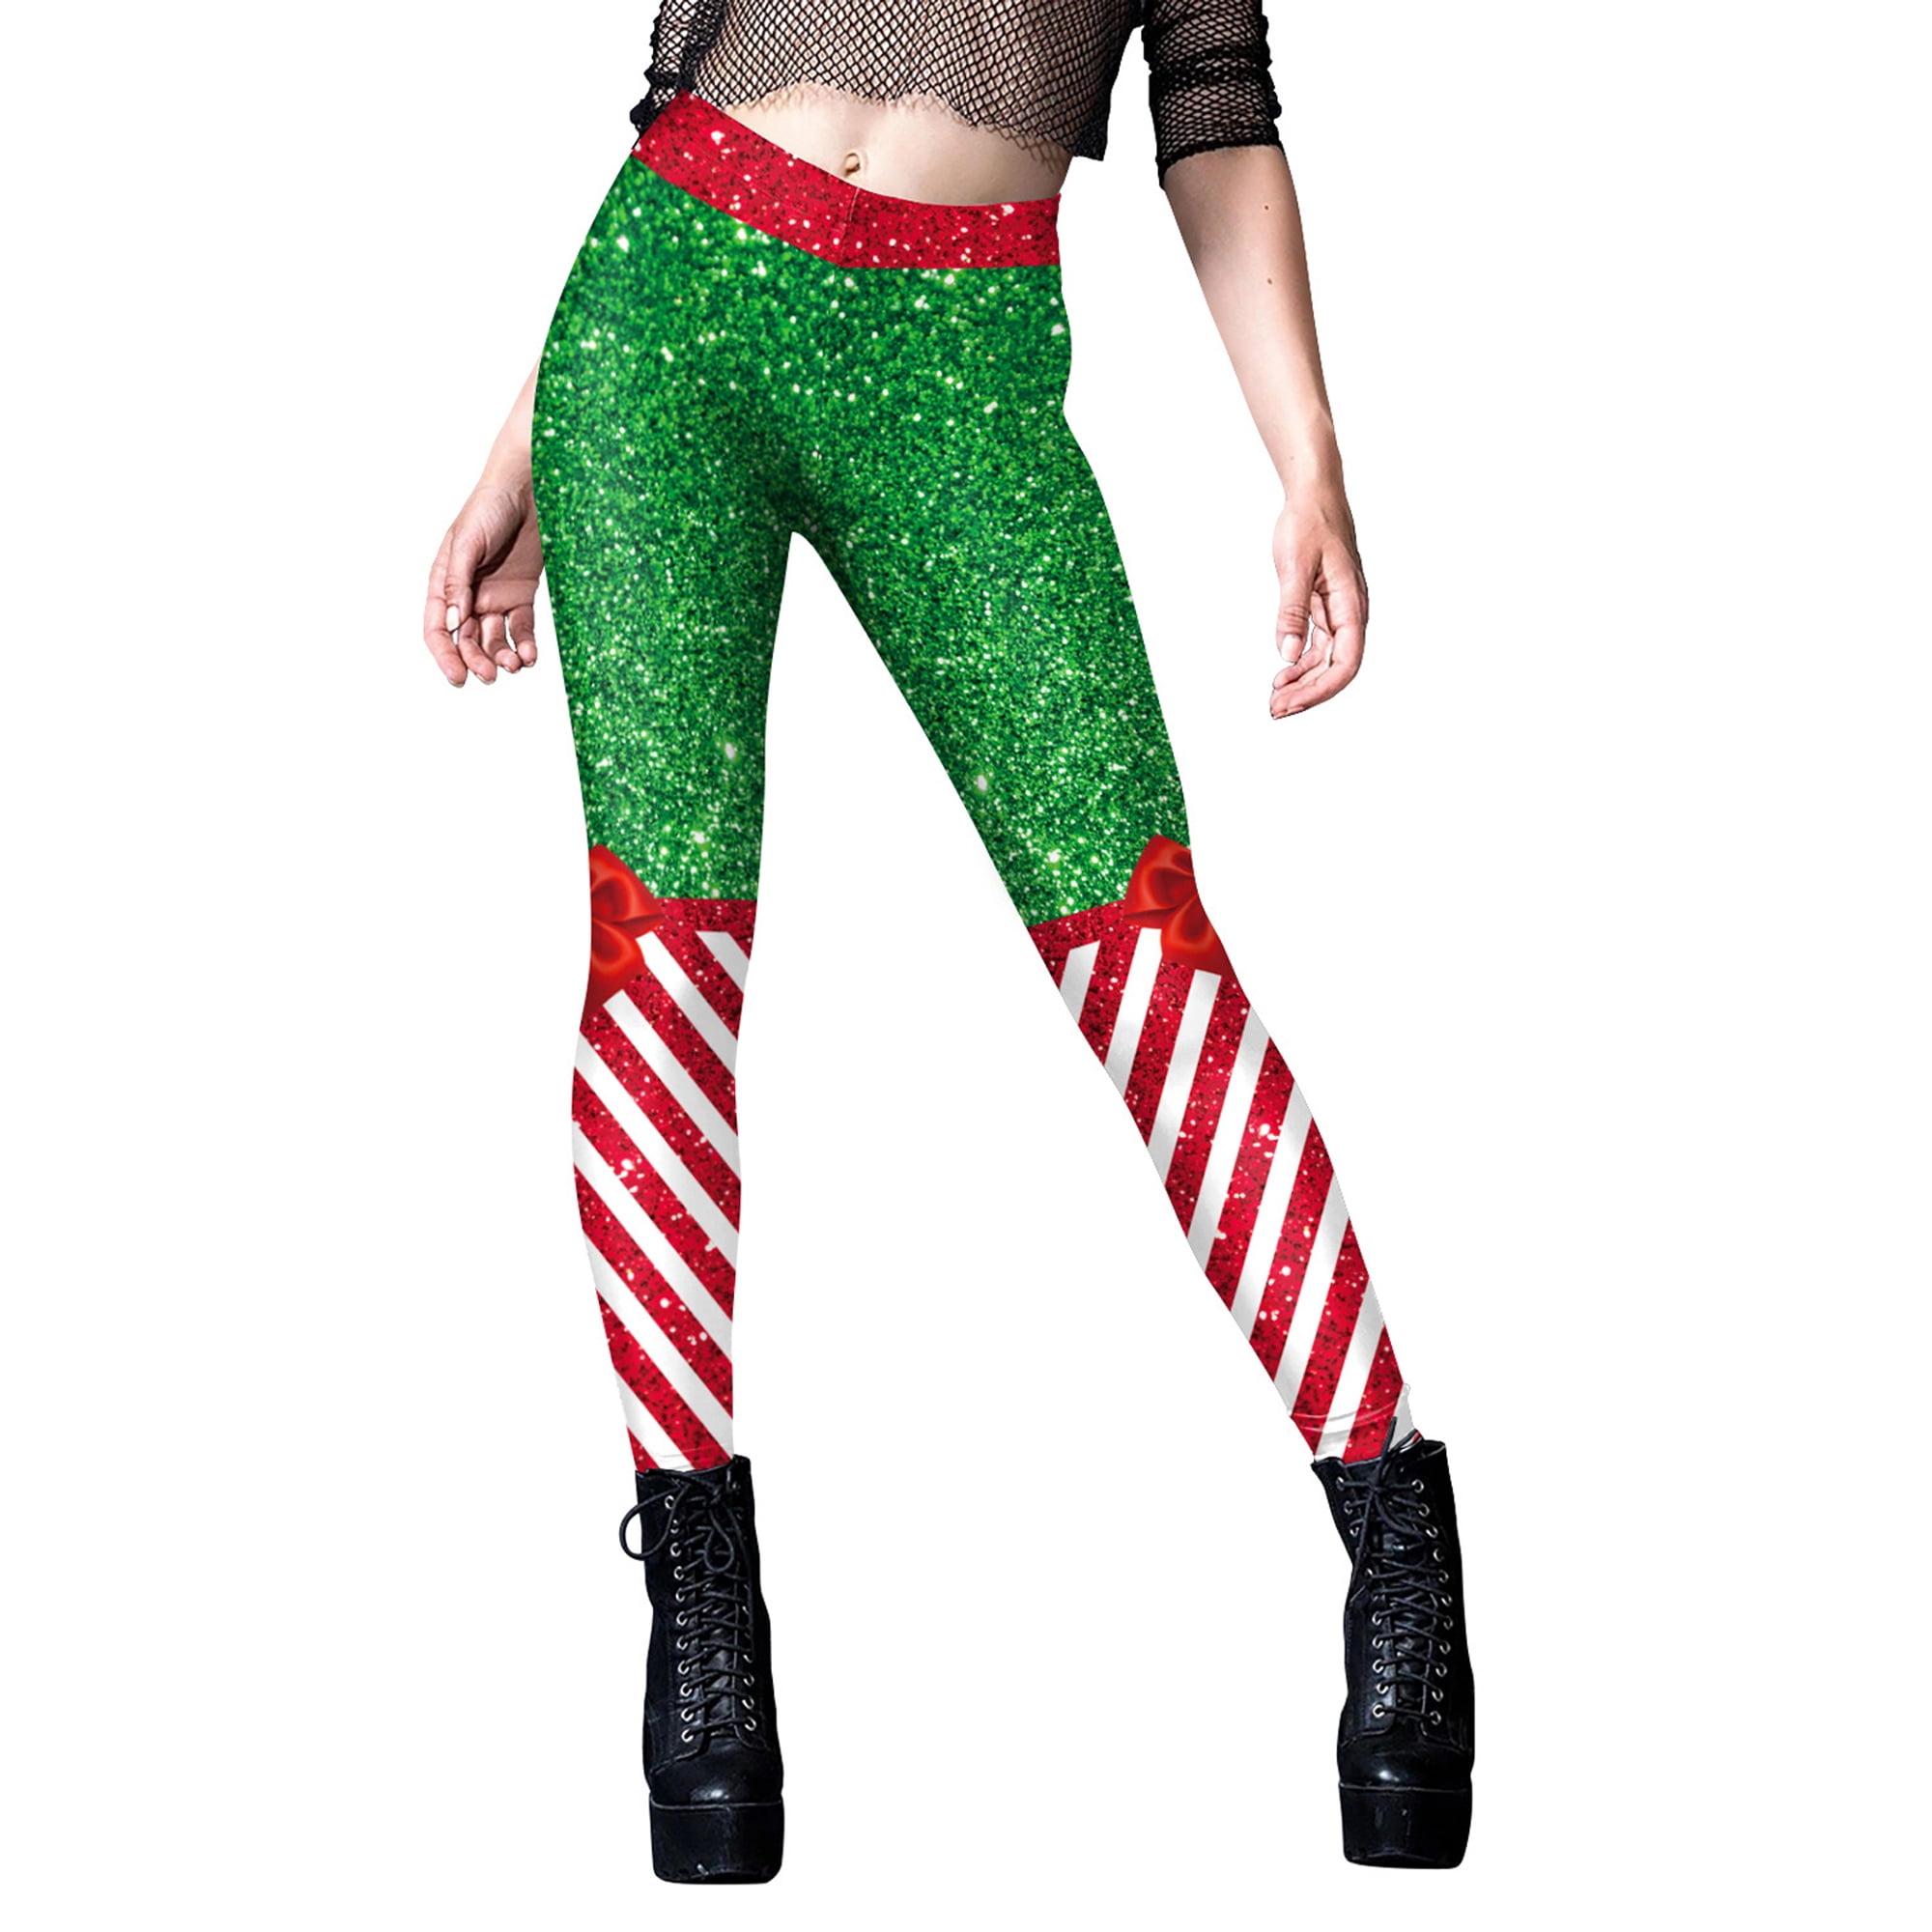 Womens Funny Printed Ugly Christmas Leggings High Waist Stretchy Slim Fit  Xmas Tights 